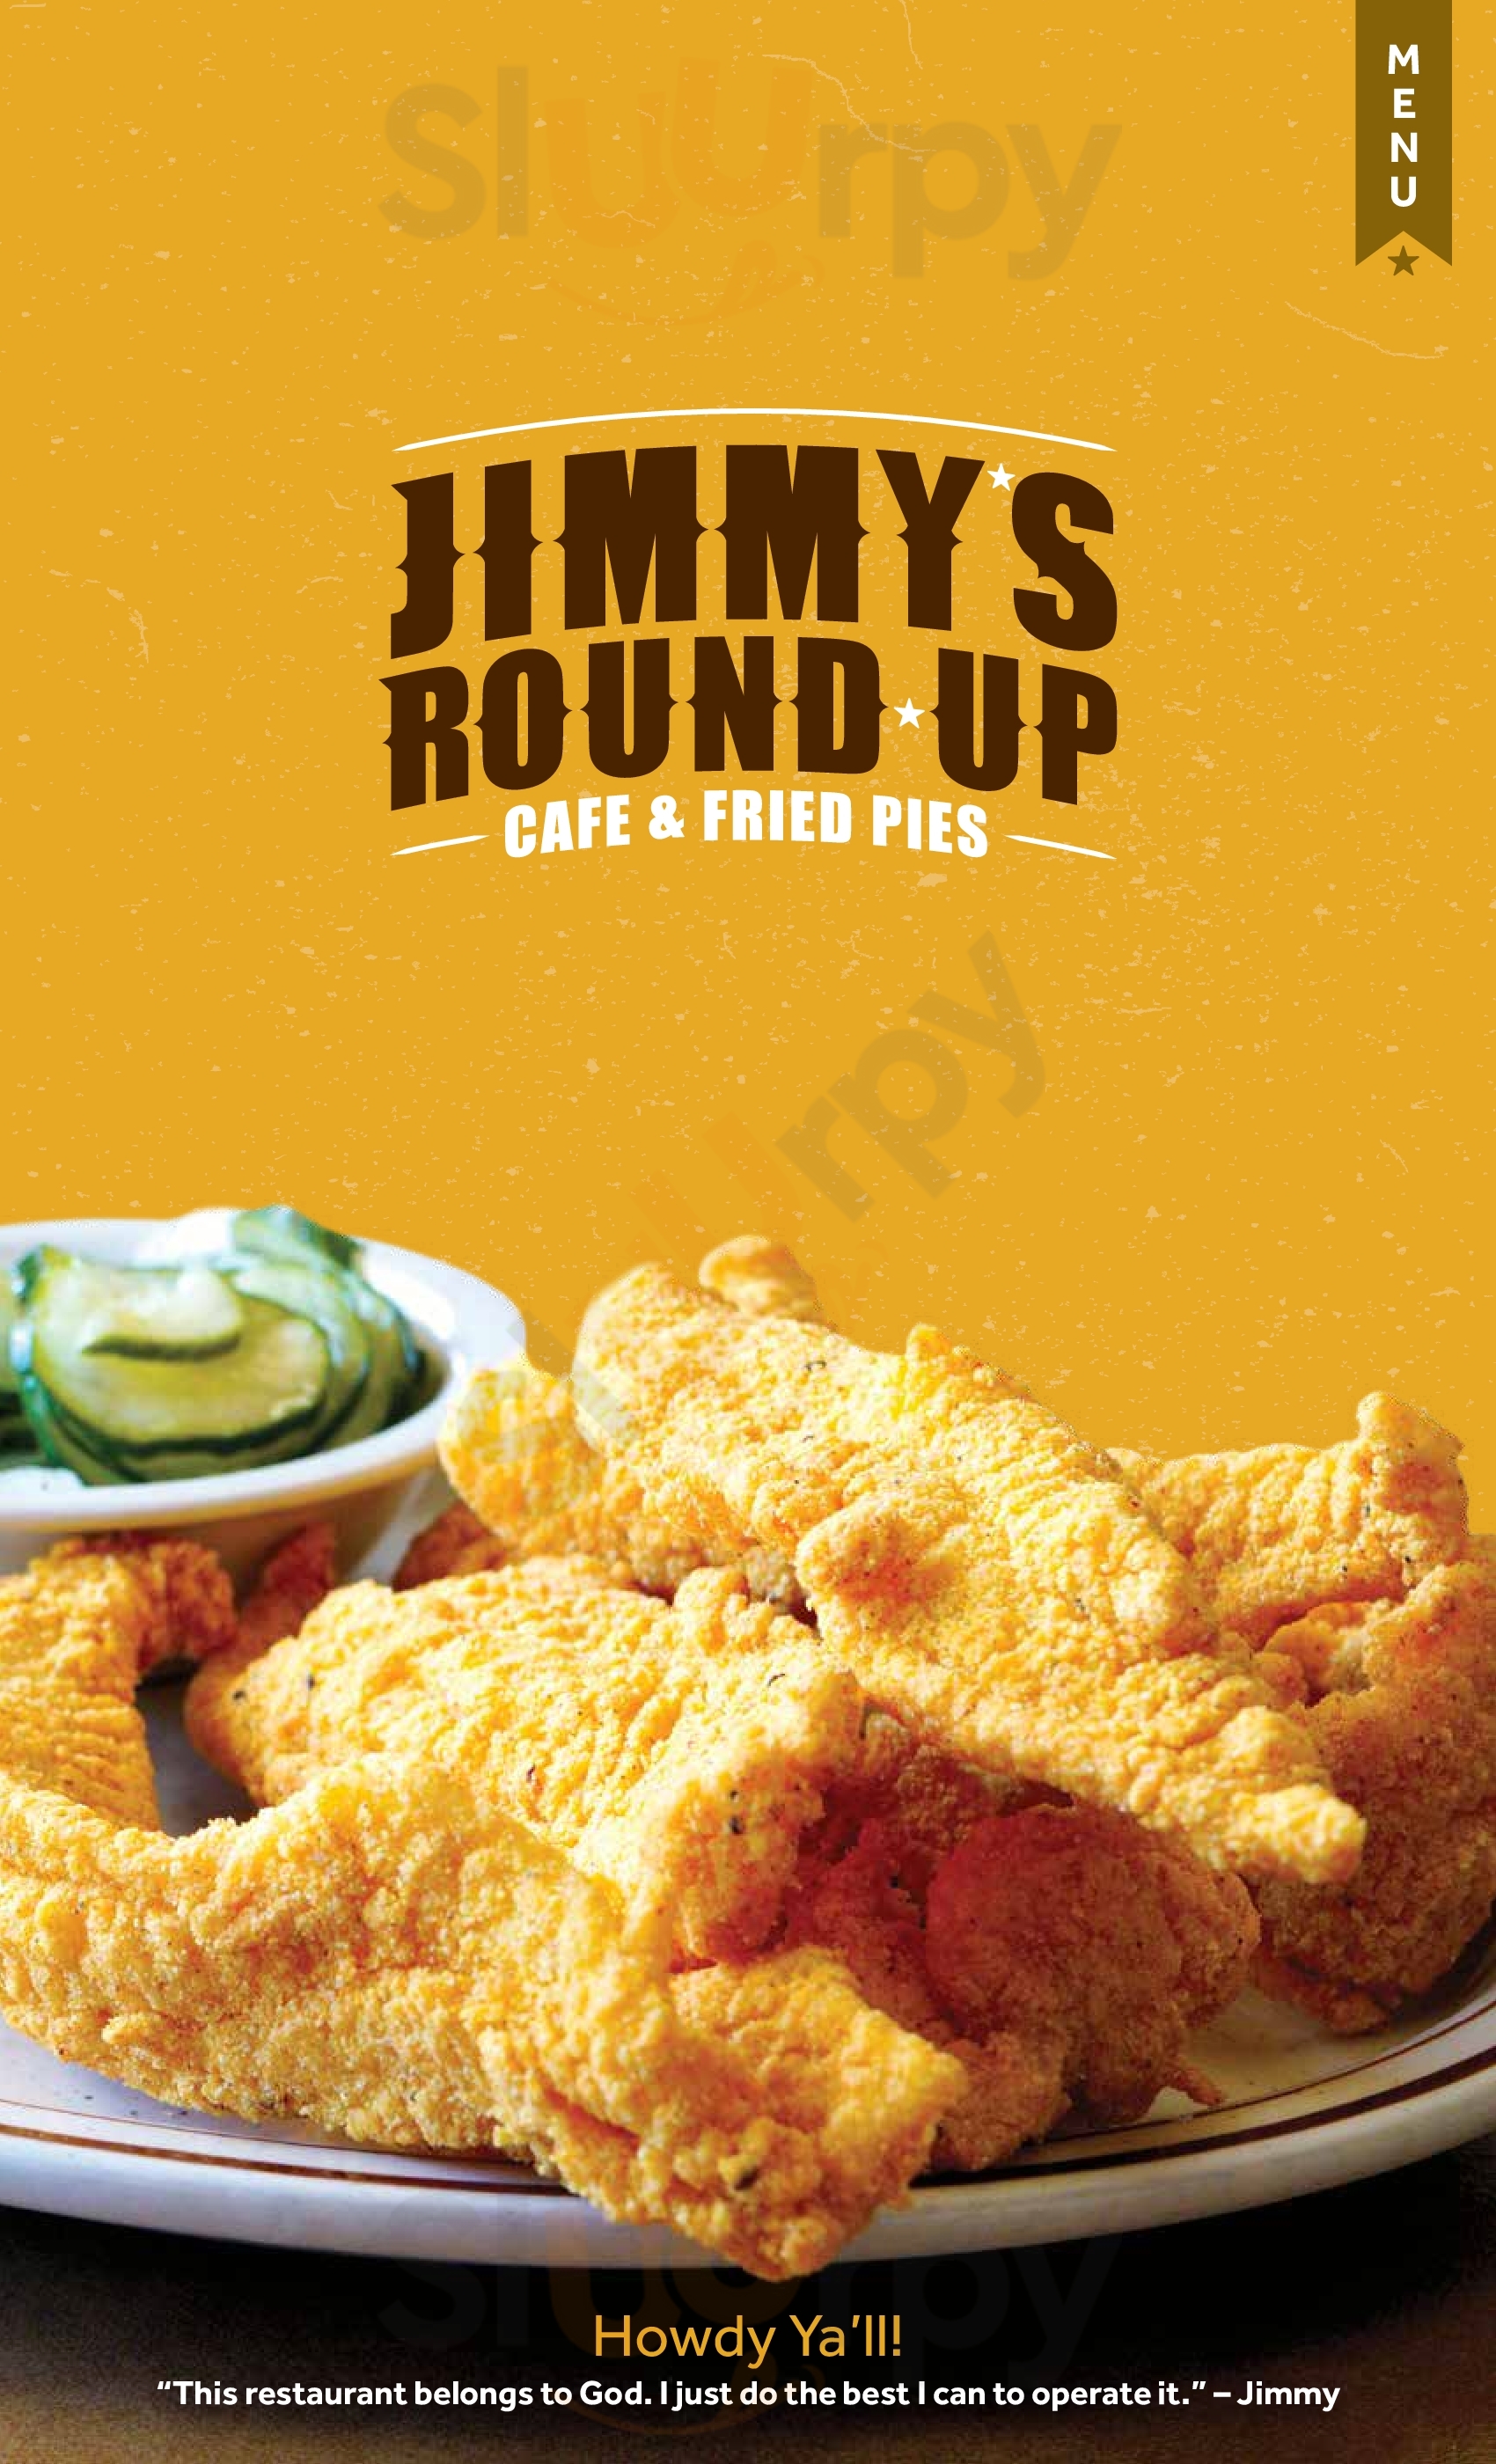 Jimmy's Round-up Cafe & Fried Pies Oklahoma City Menu - 1